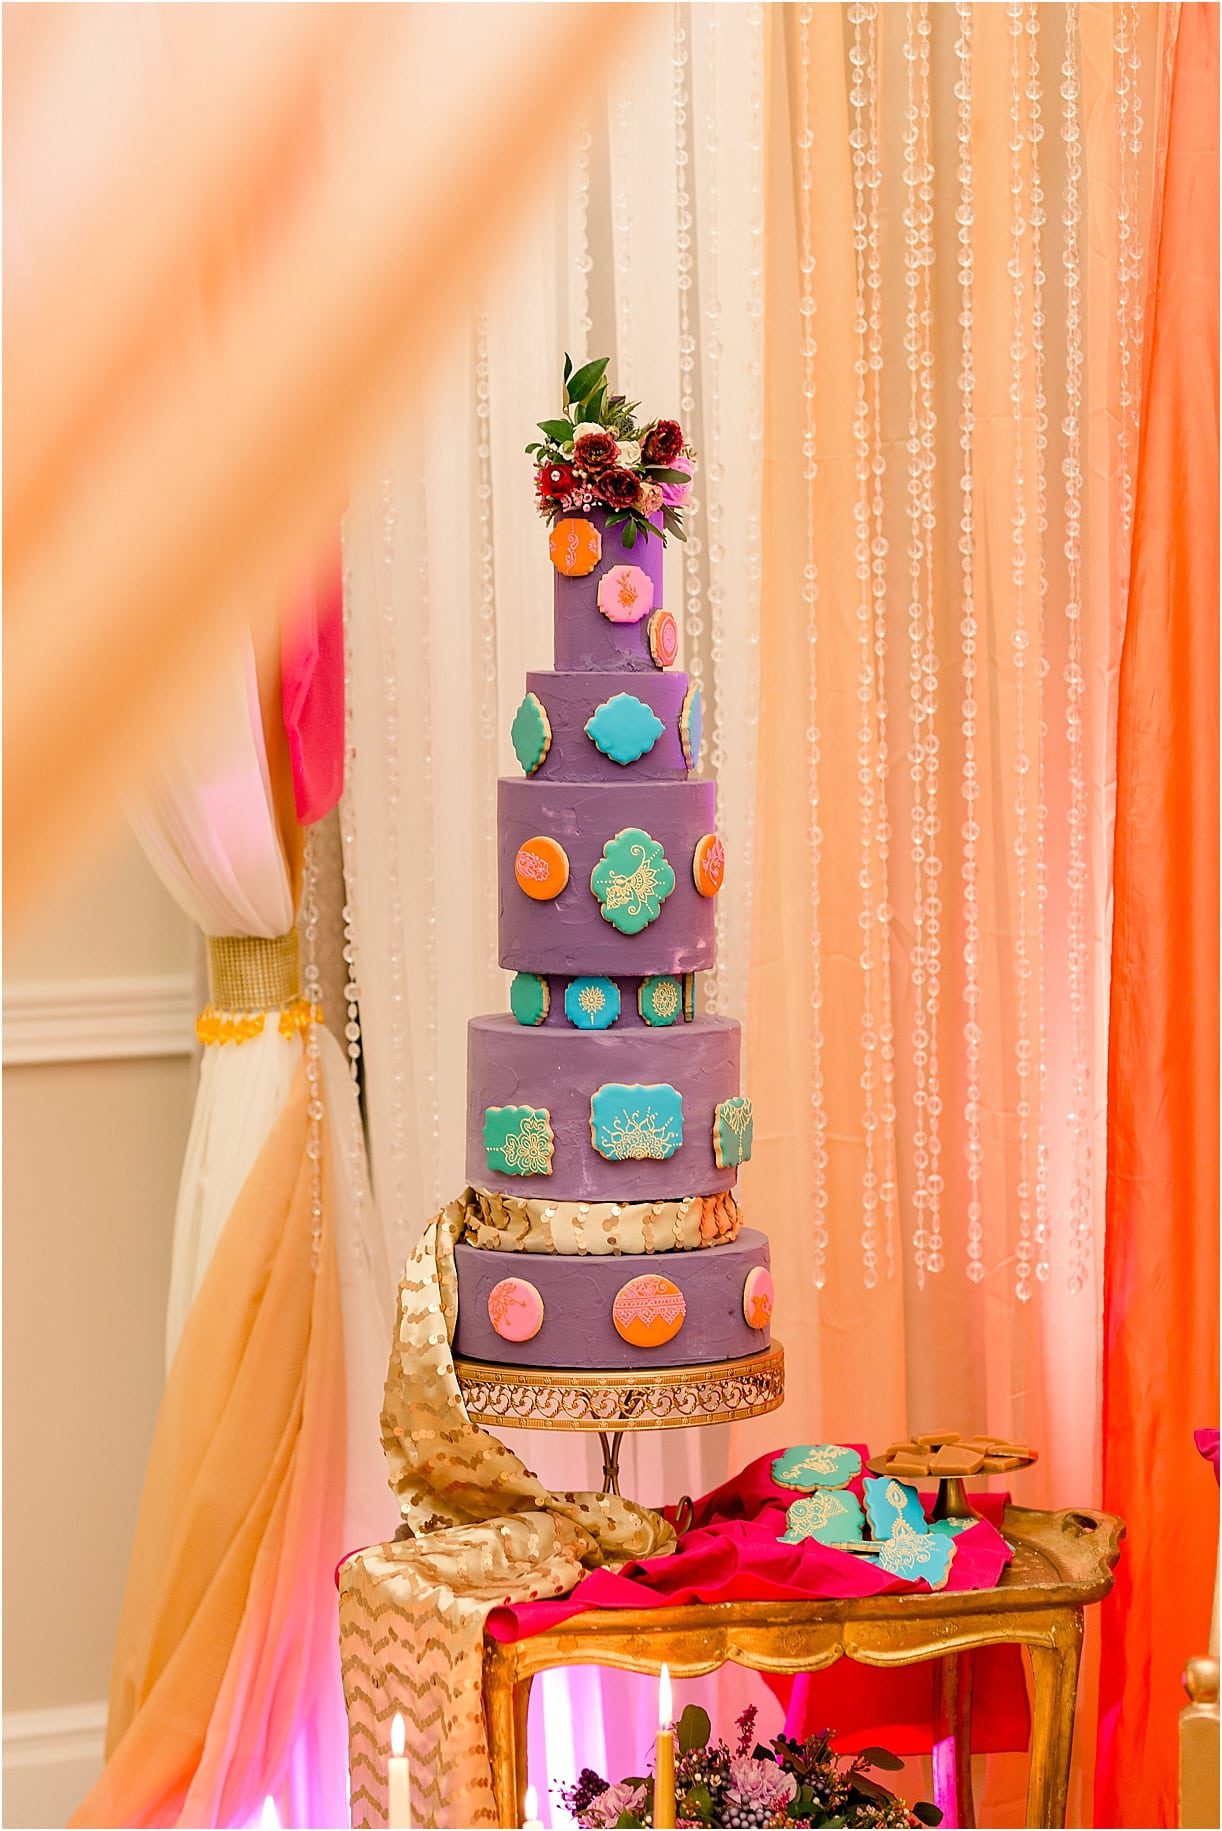 Middle Eastern Wedding | Hill City Bride Virginia Wedding Blog Travel Destination - tall cake, purple, cookies